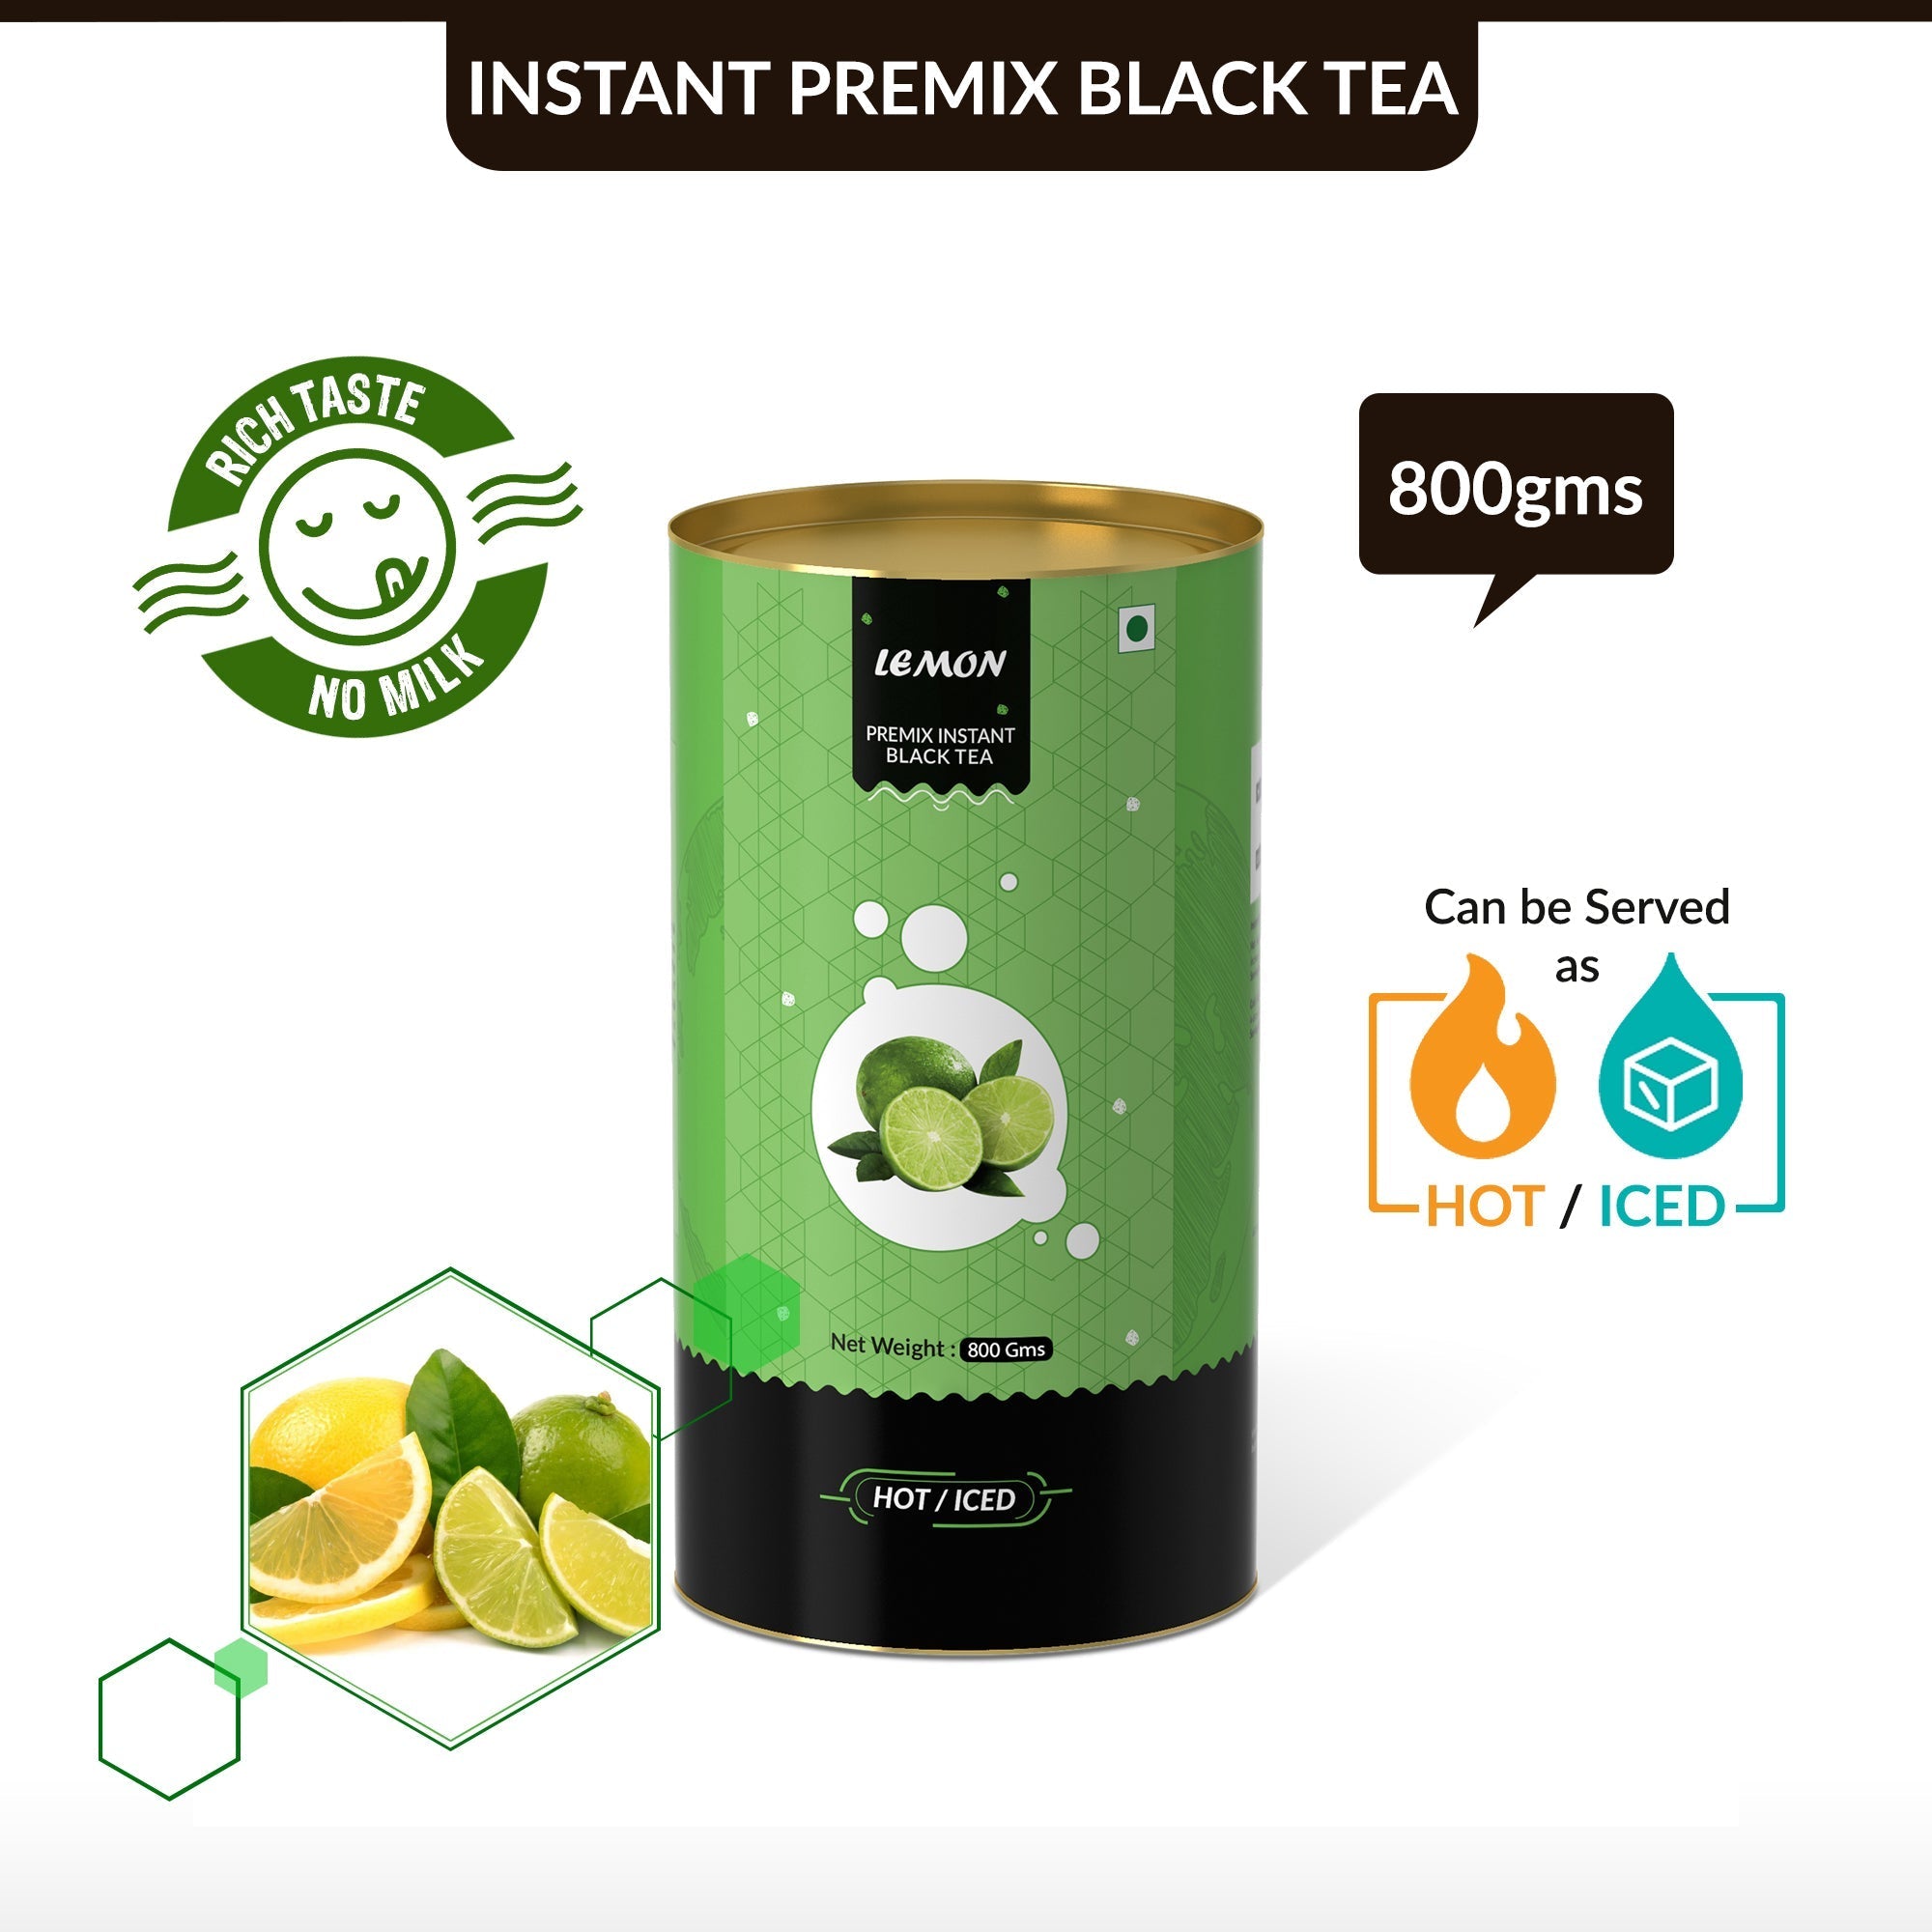 Lemon Flavored Instant Black Tea - 800 gms